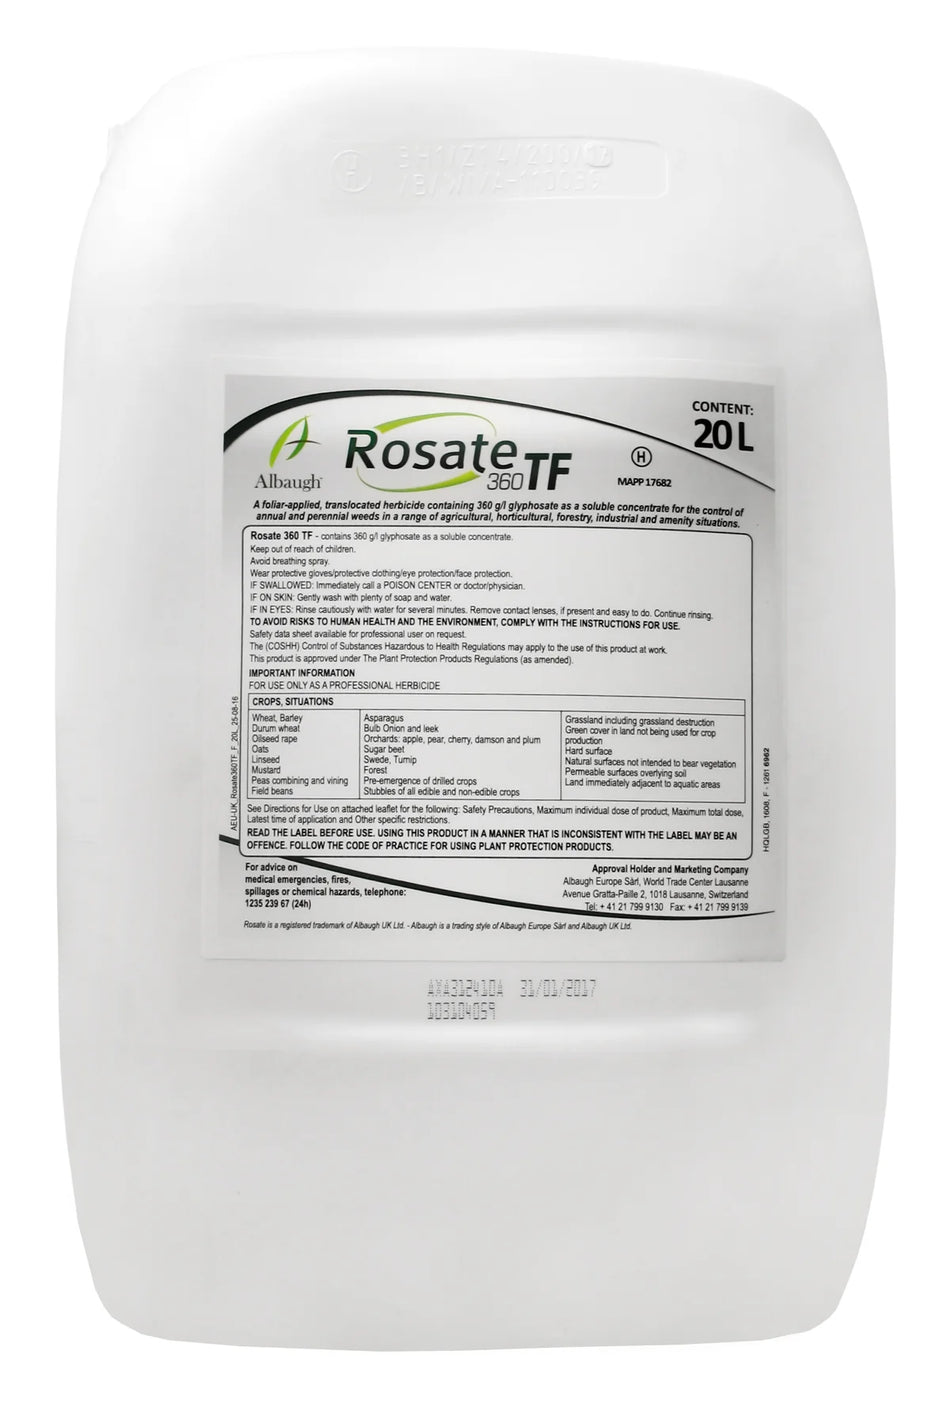 Rosate 360 TF Glyphosate 20L Total Weed Killer